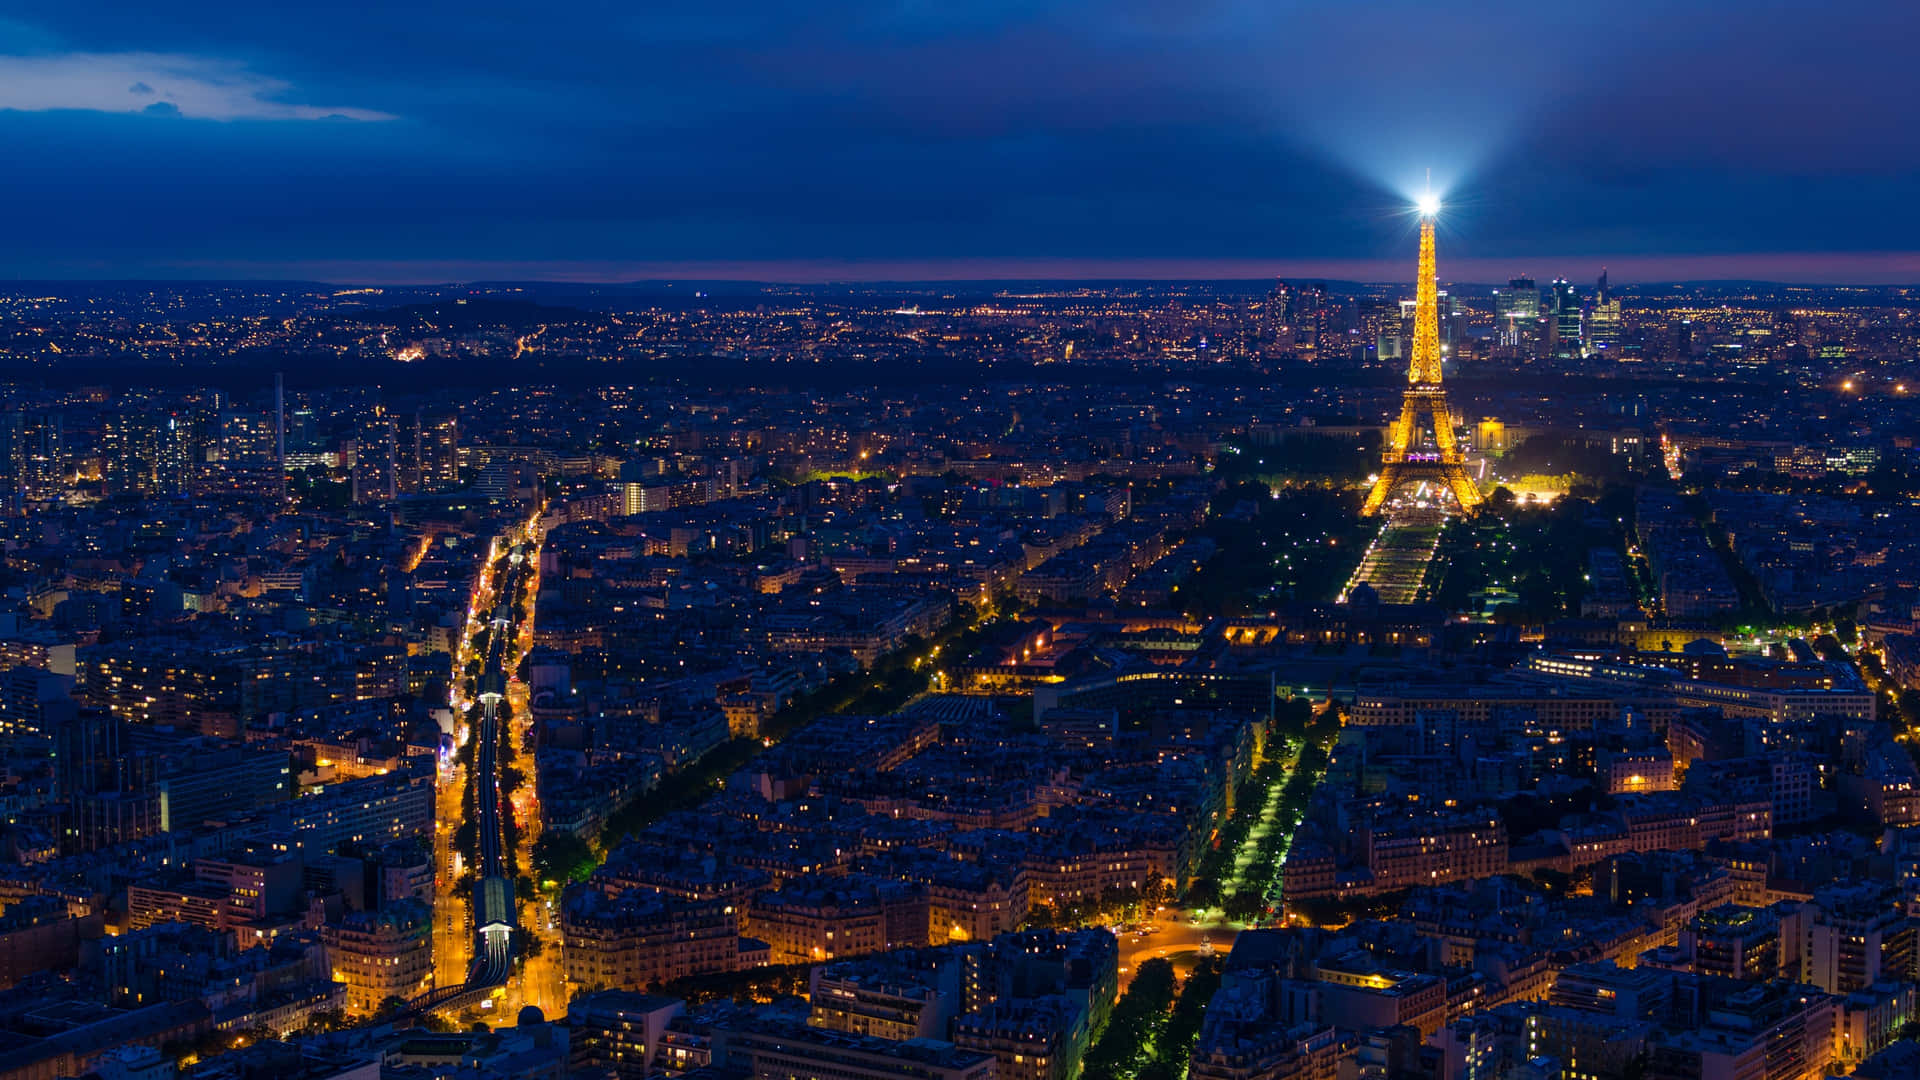 A romantic view of Paris at night Wallpaper